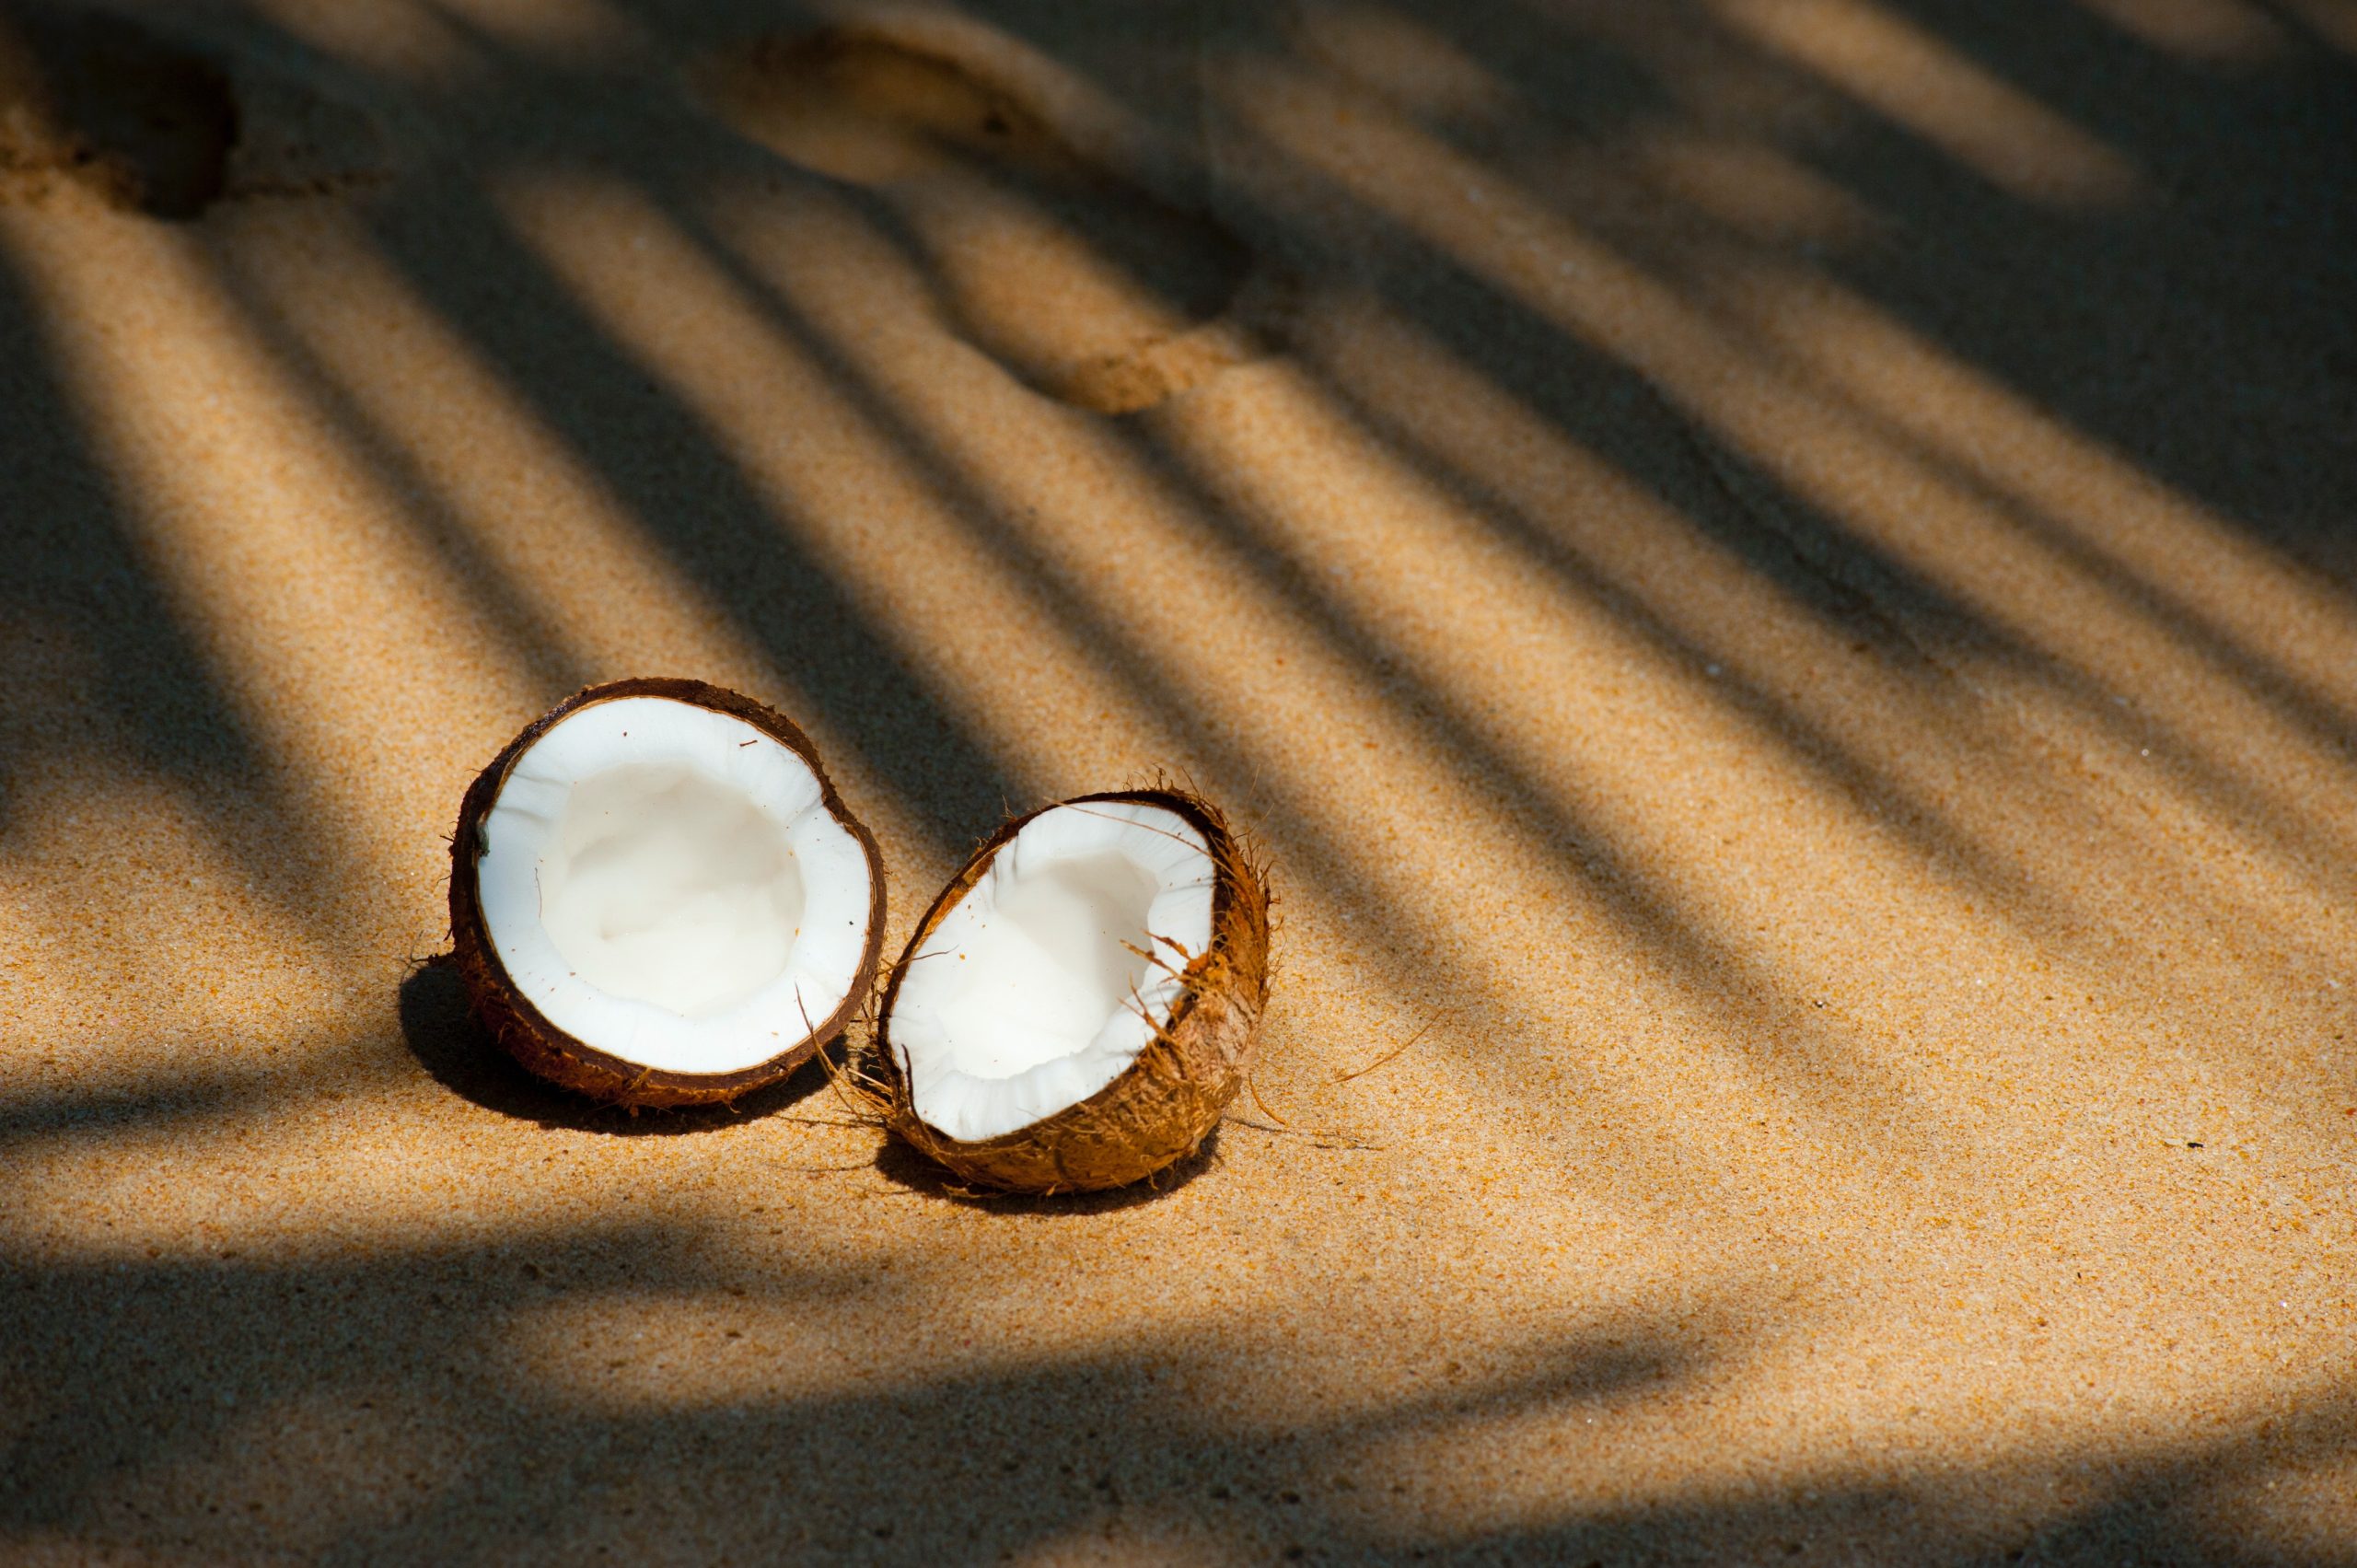 14 Amazing Health Benefits of Coconut